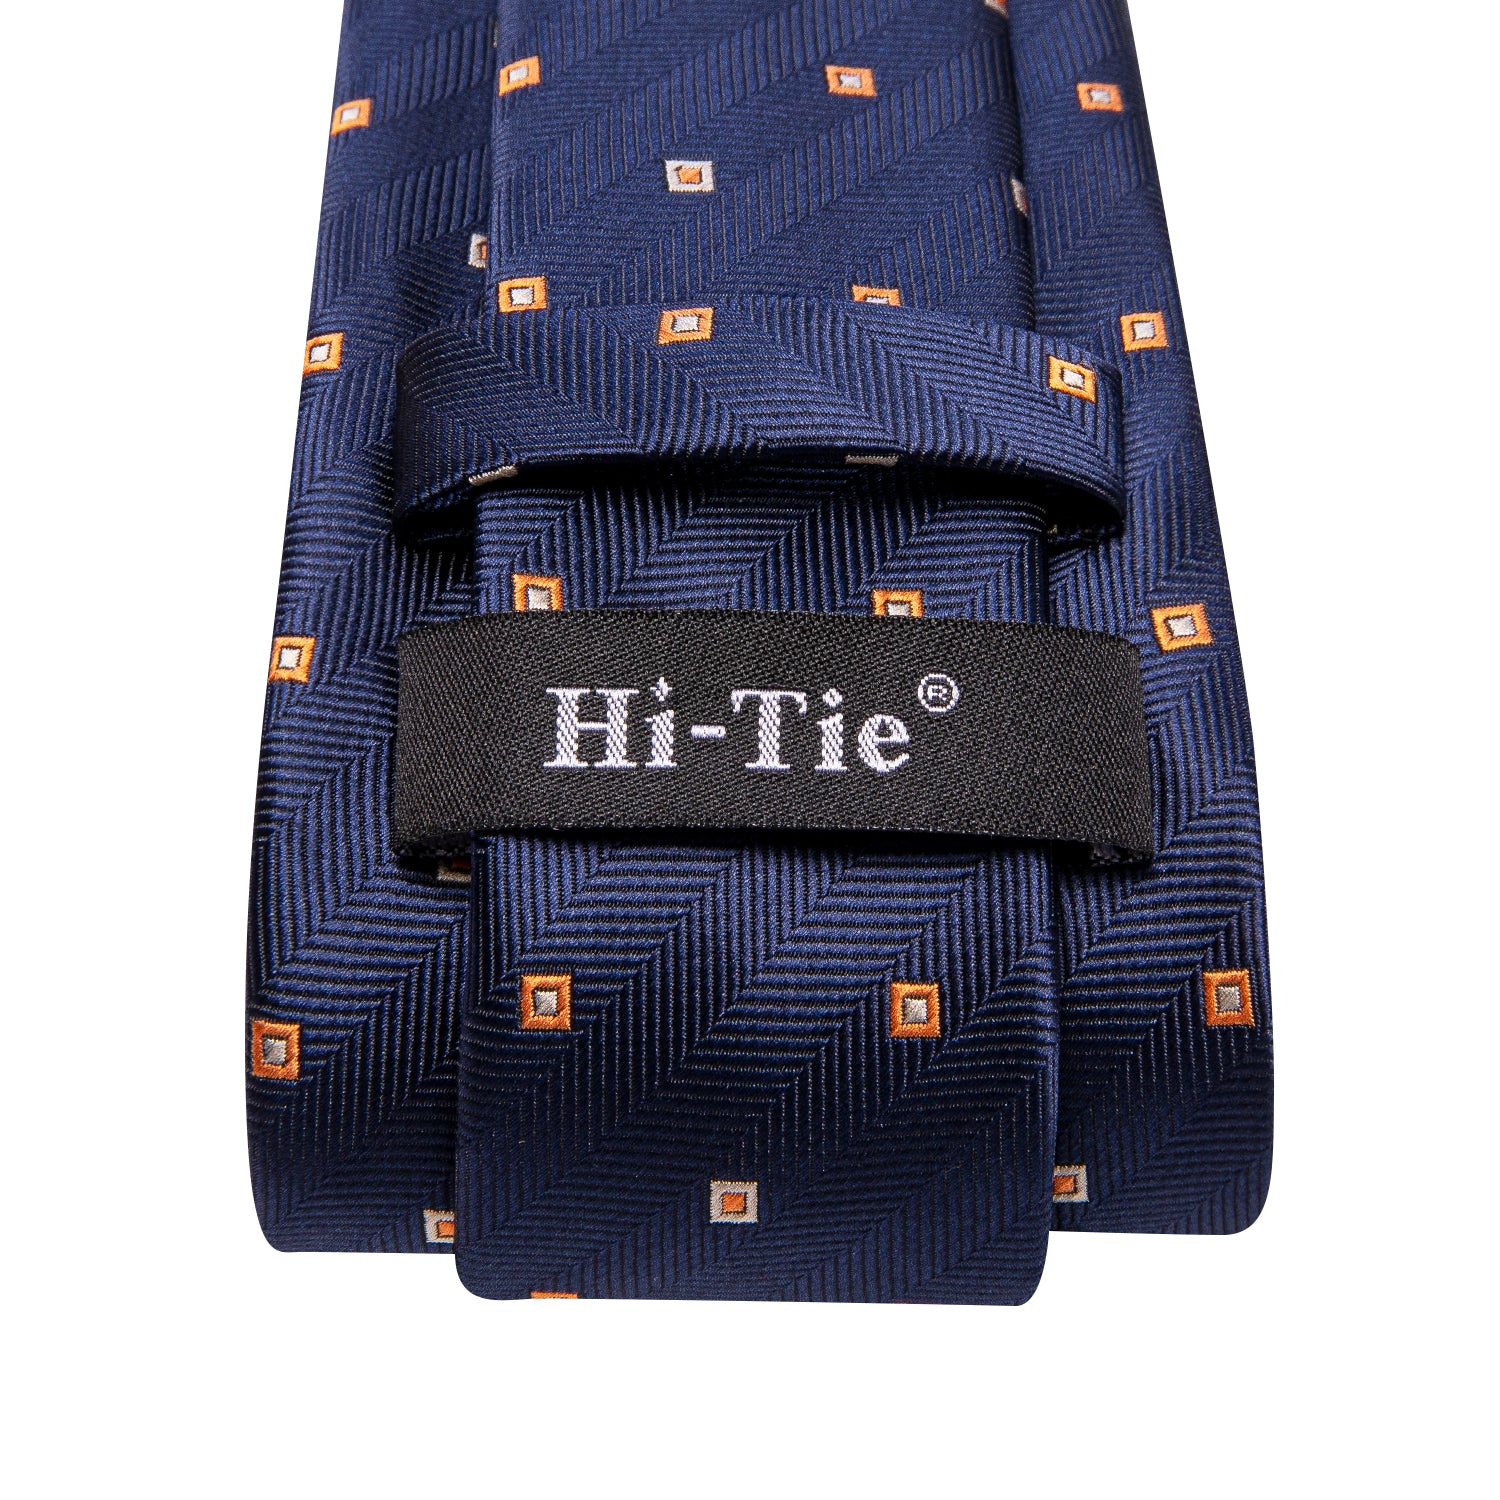 Navy Blue Novelty Men's Tie Pocket Square Cufflinks Set